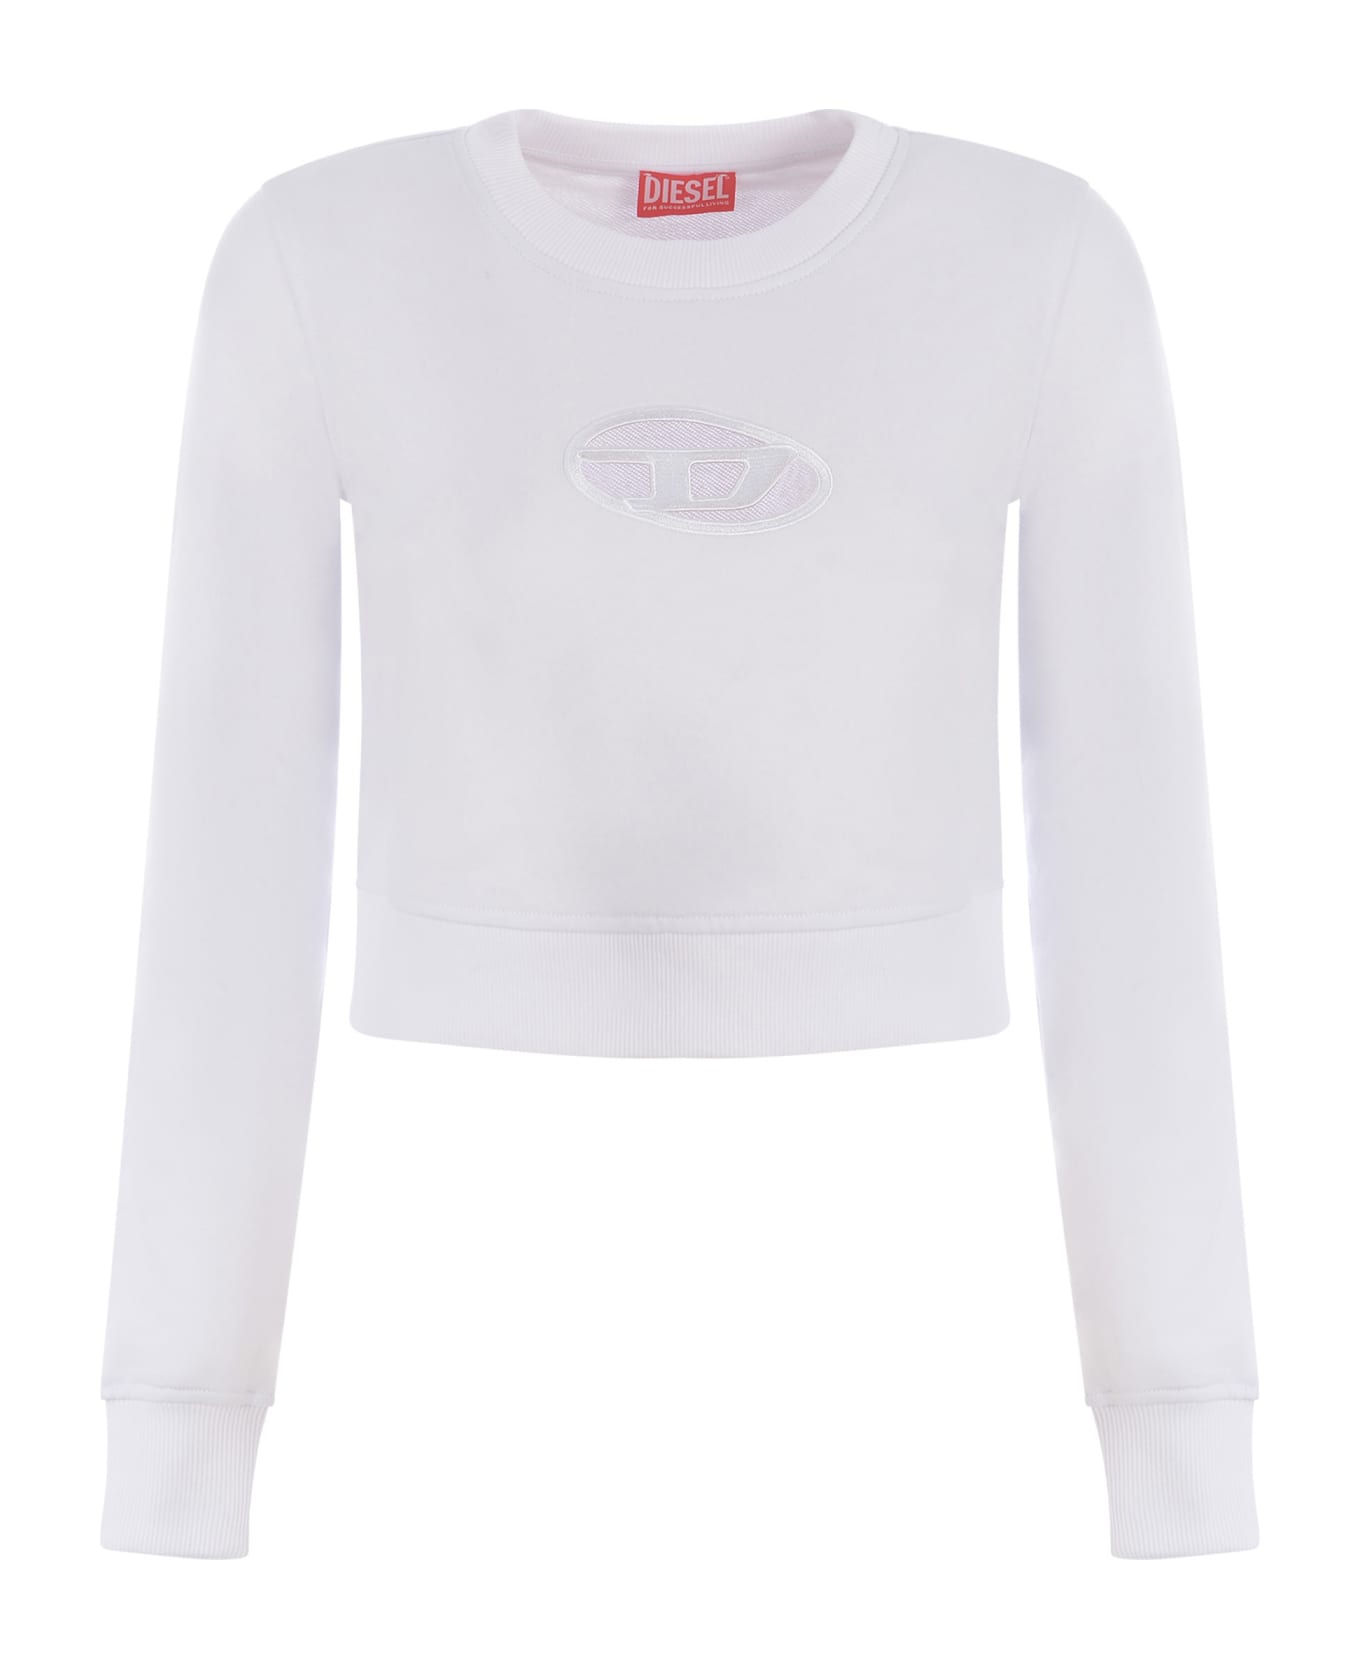 Diesel F-slimmy-od Felpa White Cropped Sweatshirt With Cut-out Oval-d - F Slimmy Od - White